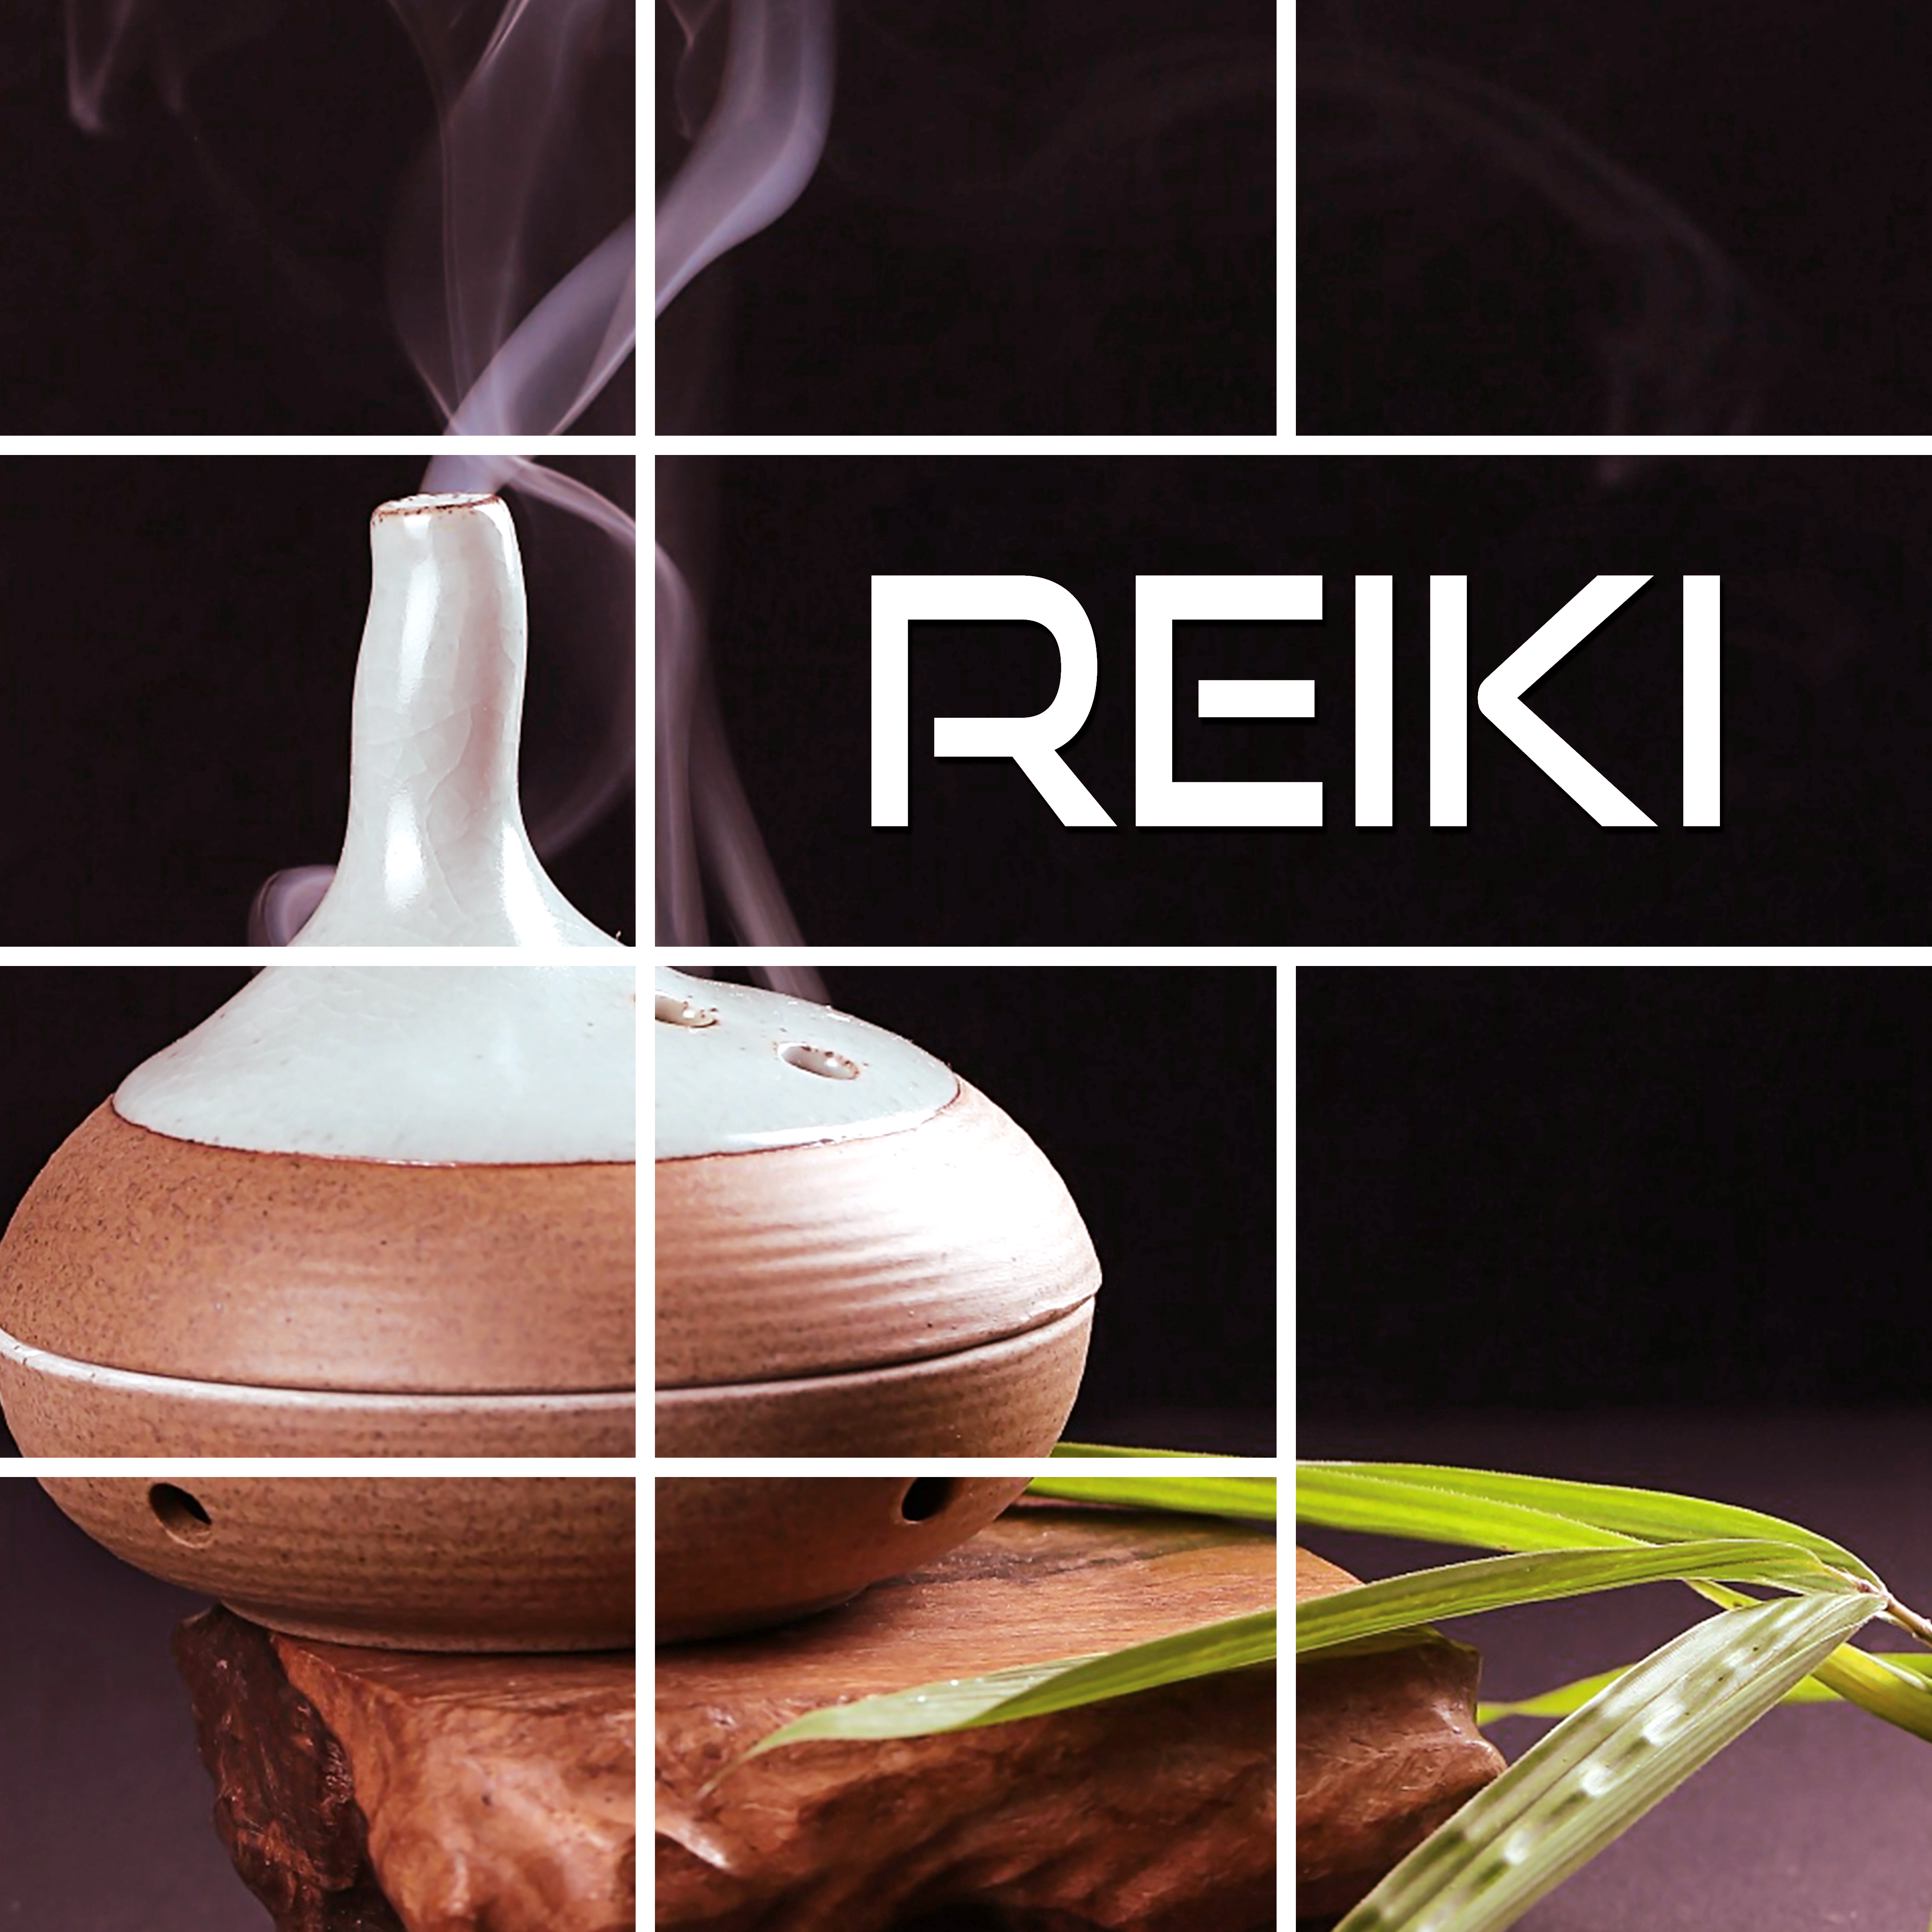 Reiki – Basic Transcendental Meditation for Beginners with Nature Sounds, Ocean Sounds for Yoga Class & Mindfulness Meditation, Zen, Reiki, Sleep